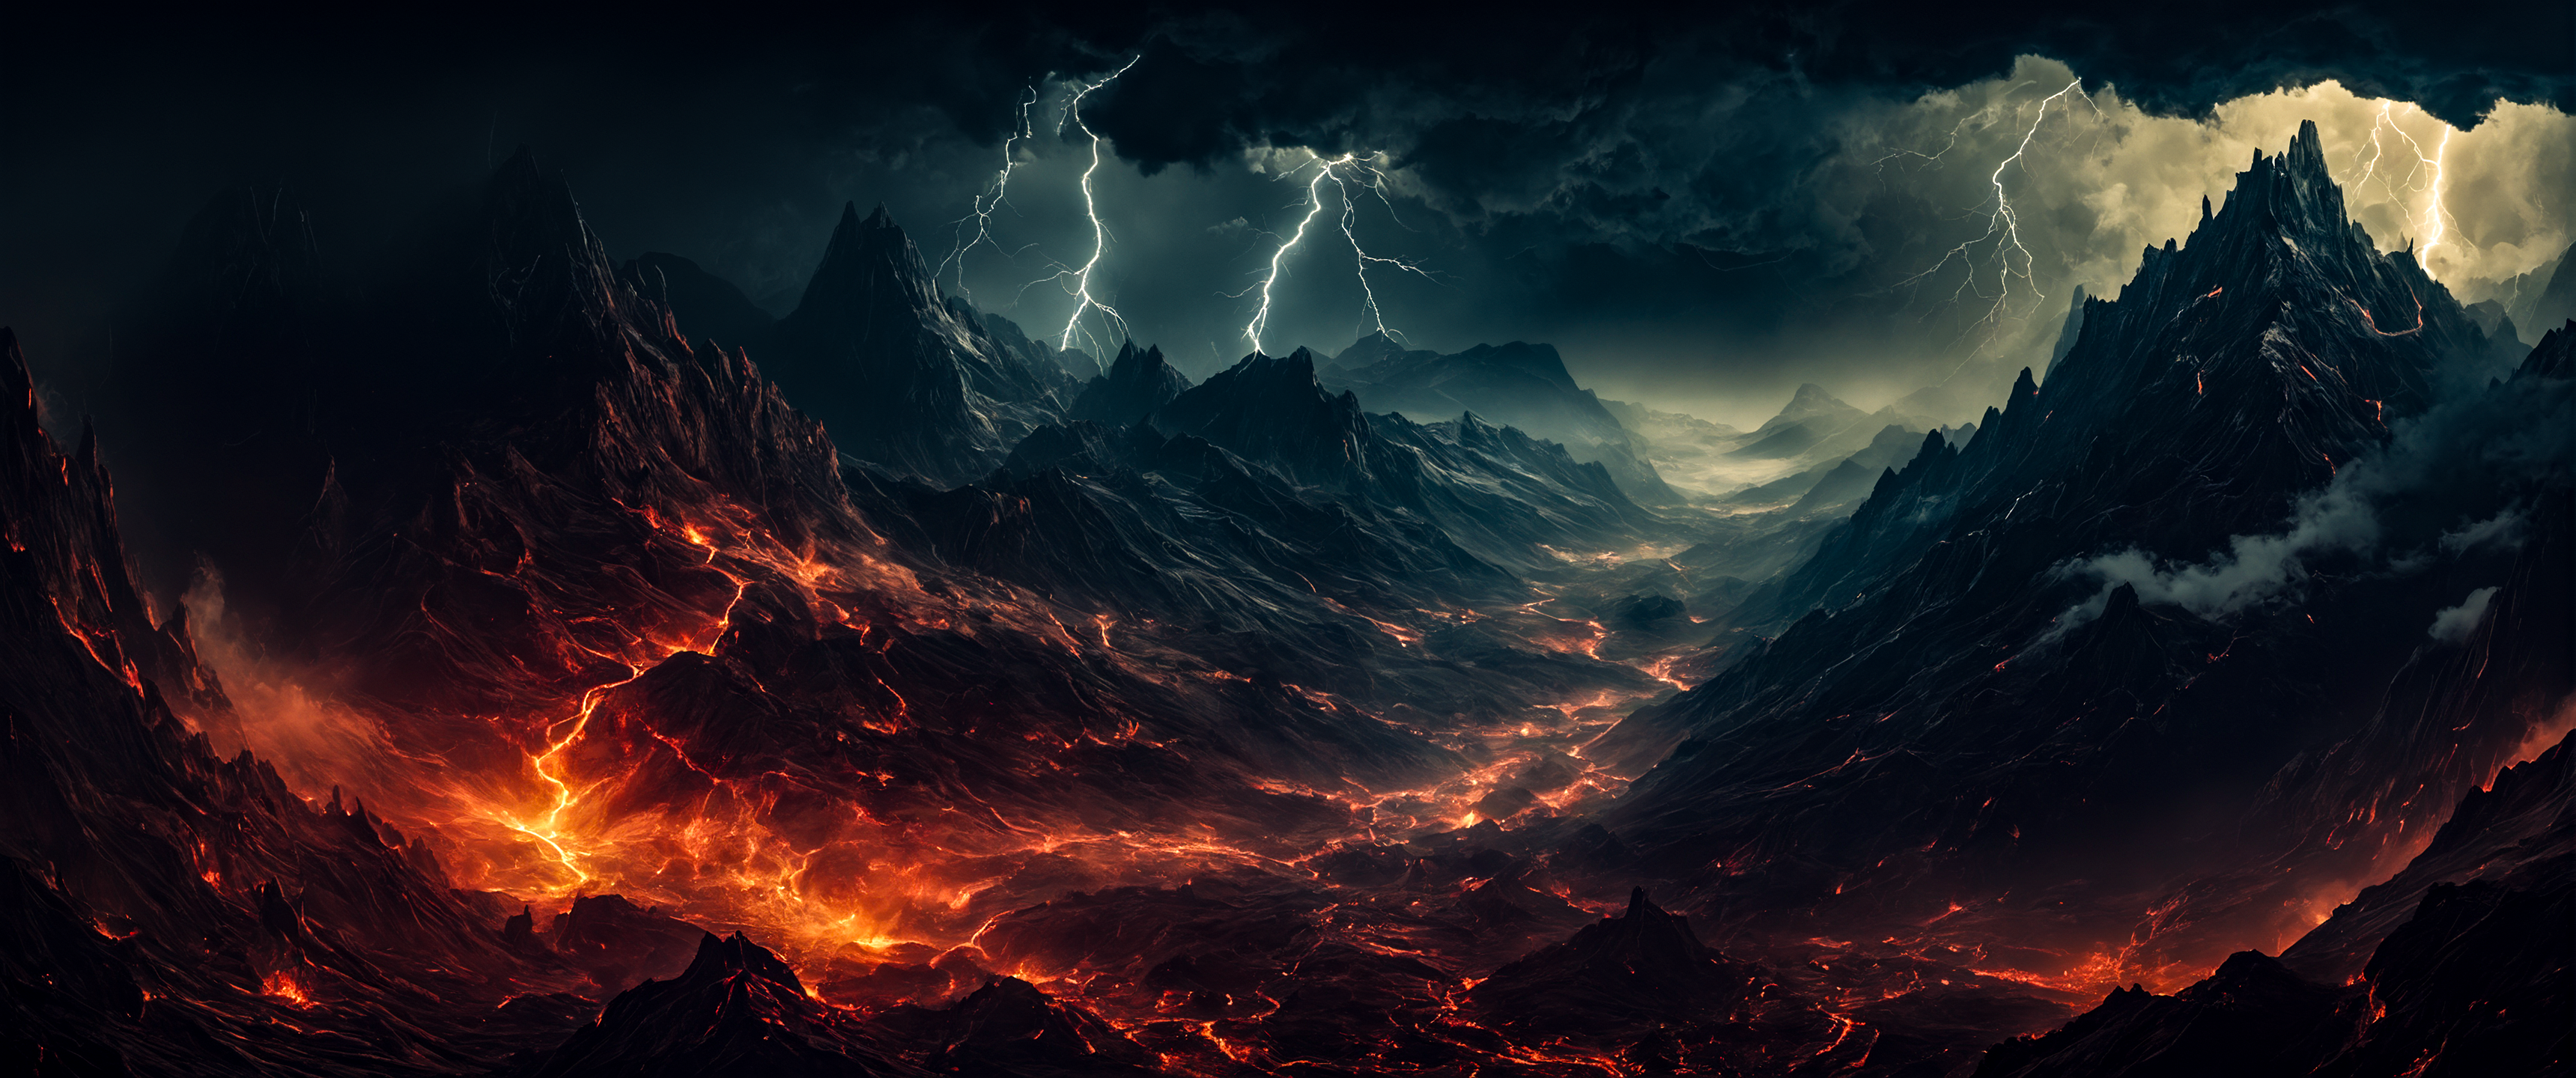 General 3440x1440 AI art landscape hell digital art lava lightning clouds sky nature mountains